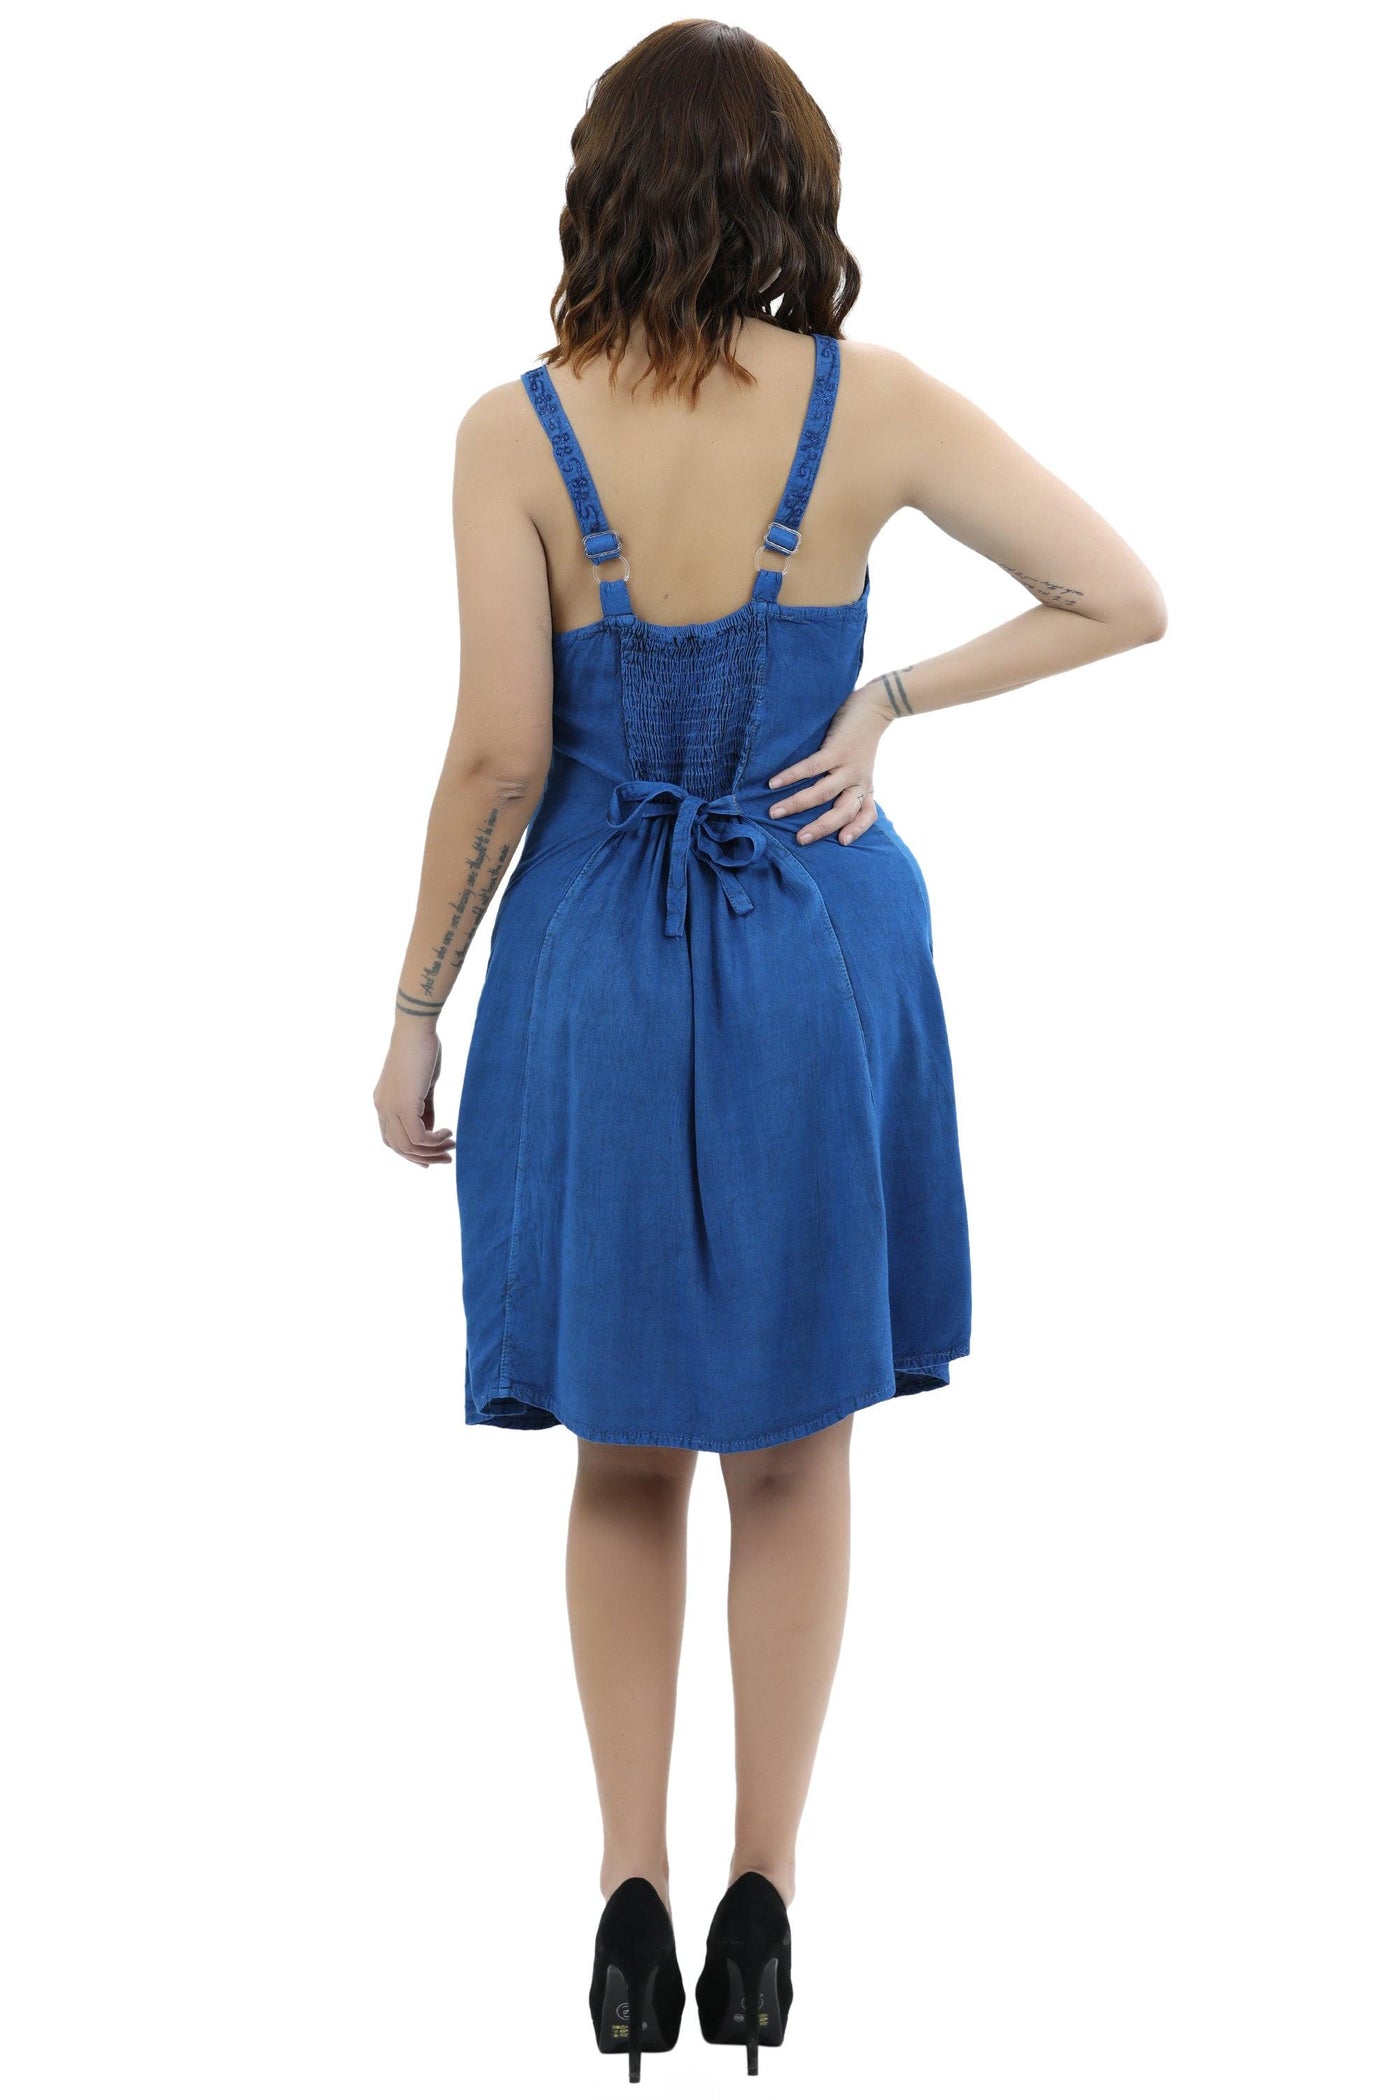 Double Dye Adjustable Dress 1108  - Advance Apparels Inc